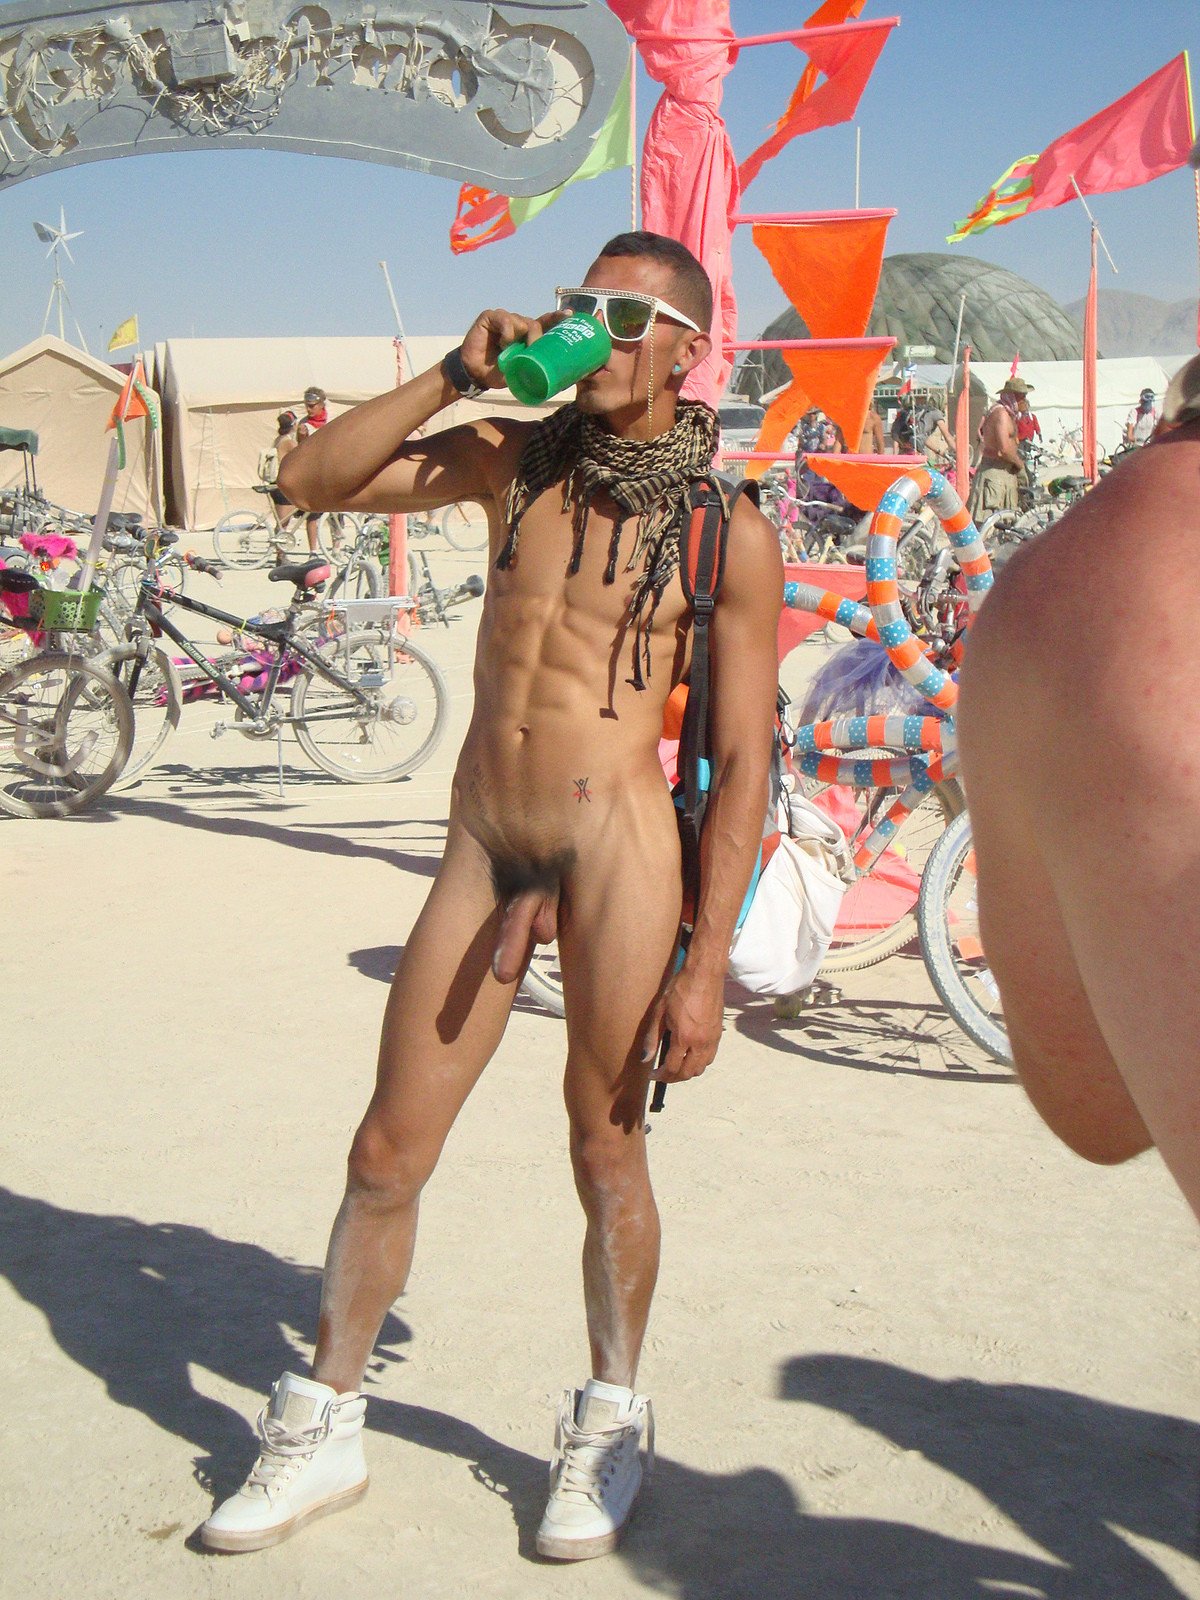 Burning Man pic